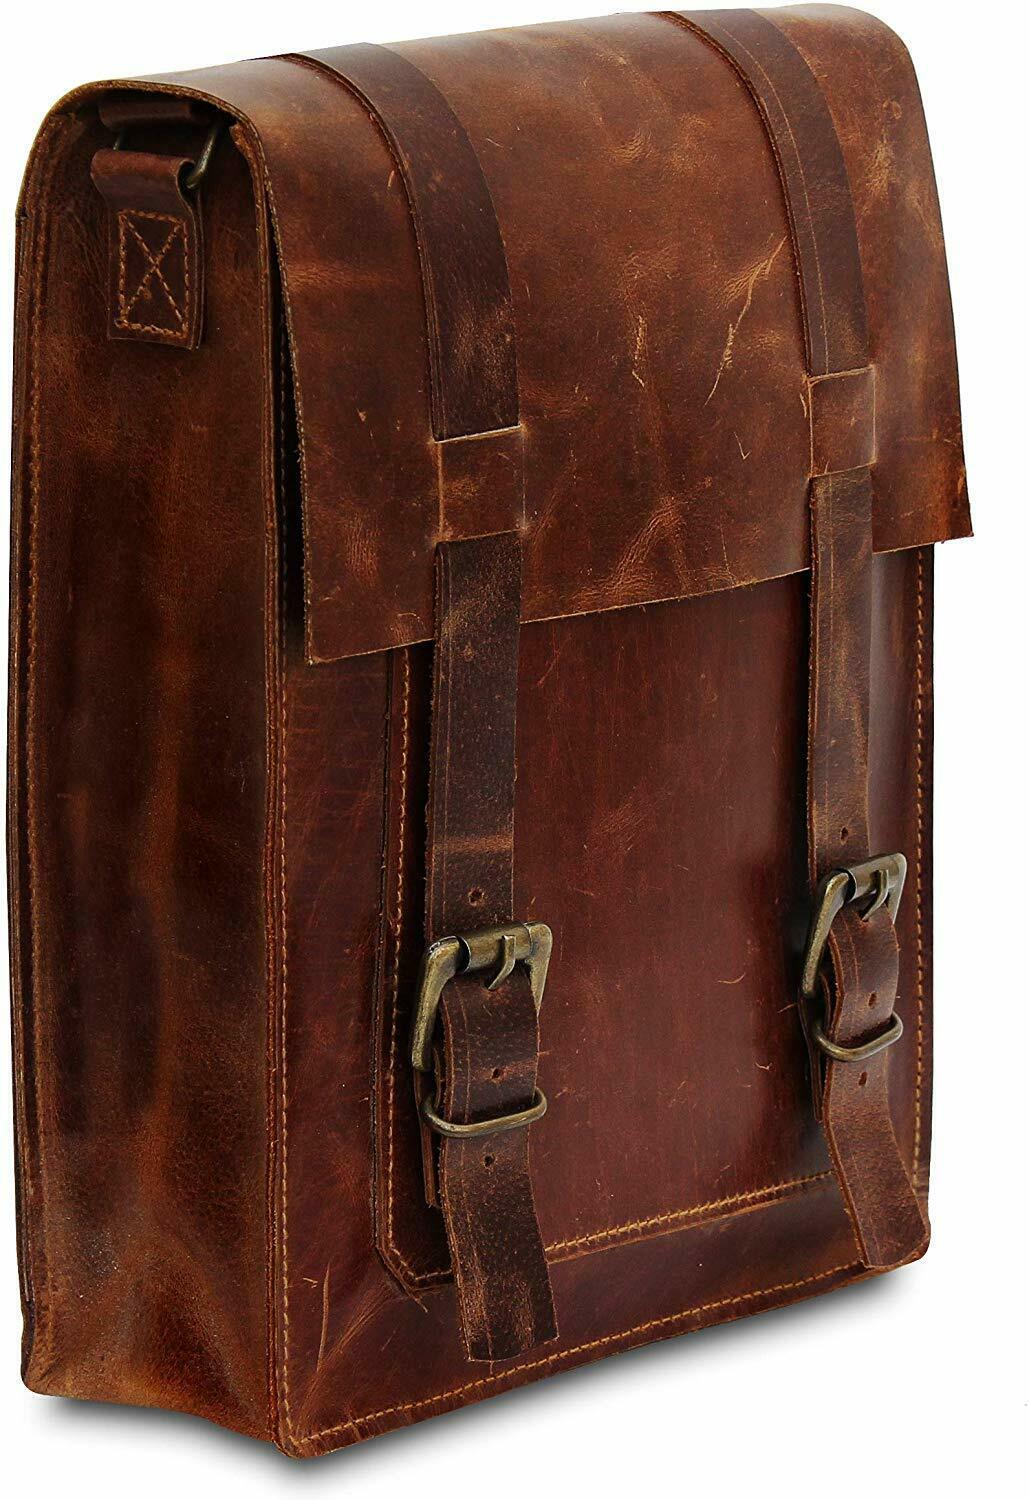 iPad Shoulder Bag / iPad Case with Shoulder Strap / Premium Bag - Laptop Cases & Bags